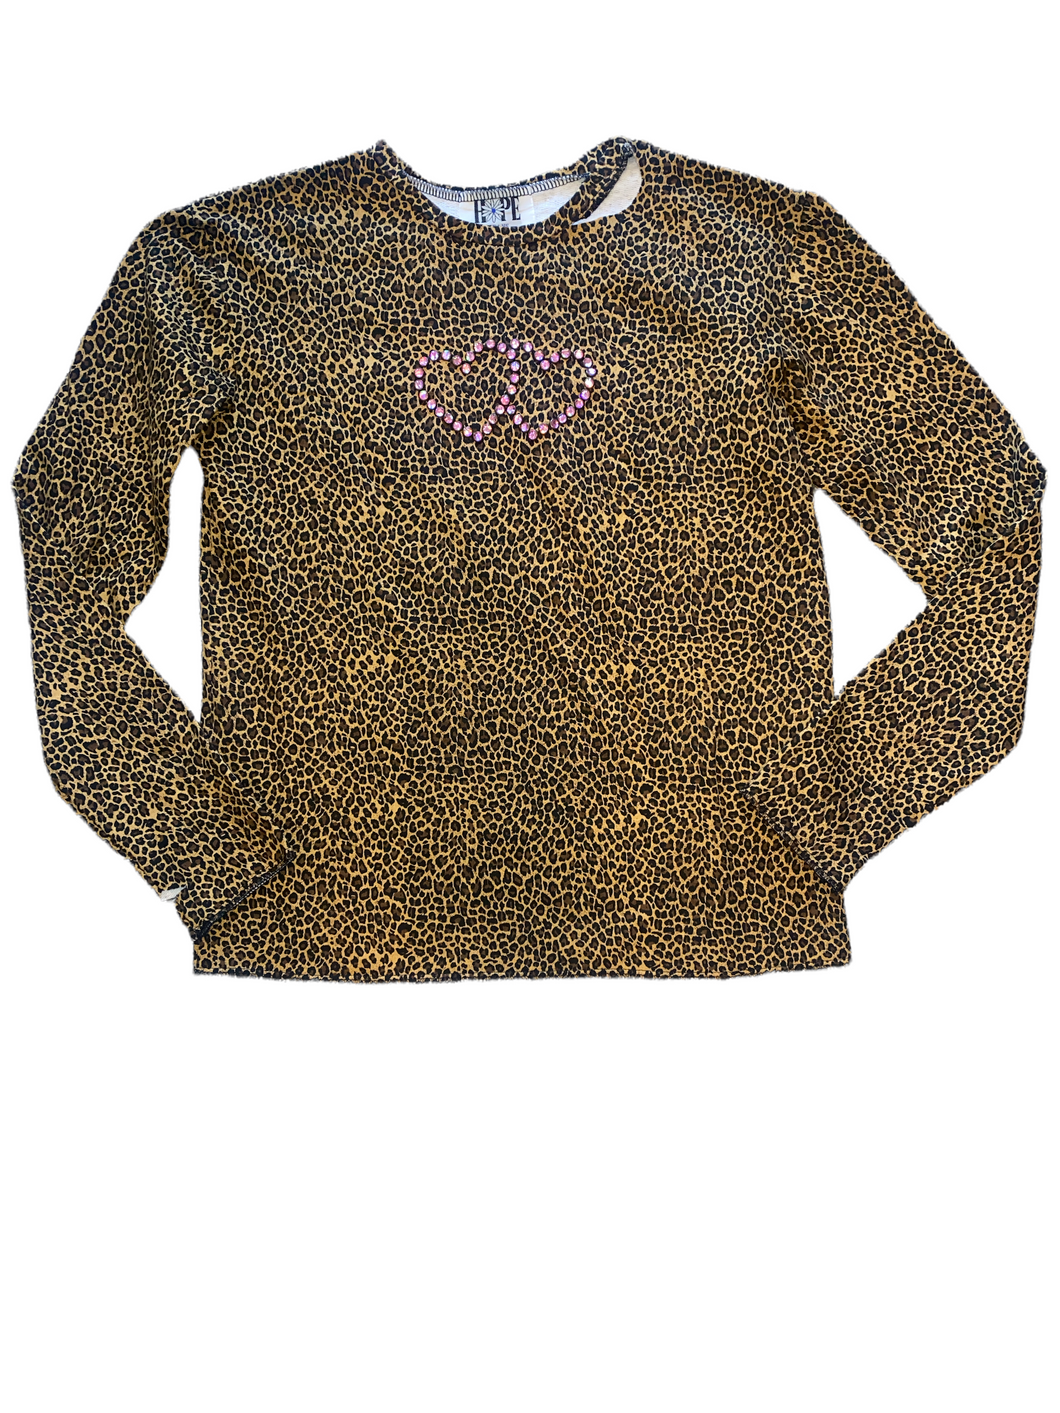 Hope Jeans girls leopard long sleeve rhinestone hearts top 14